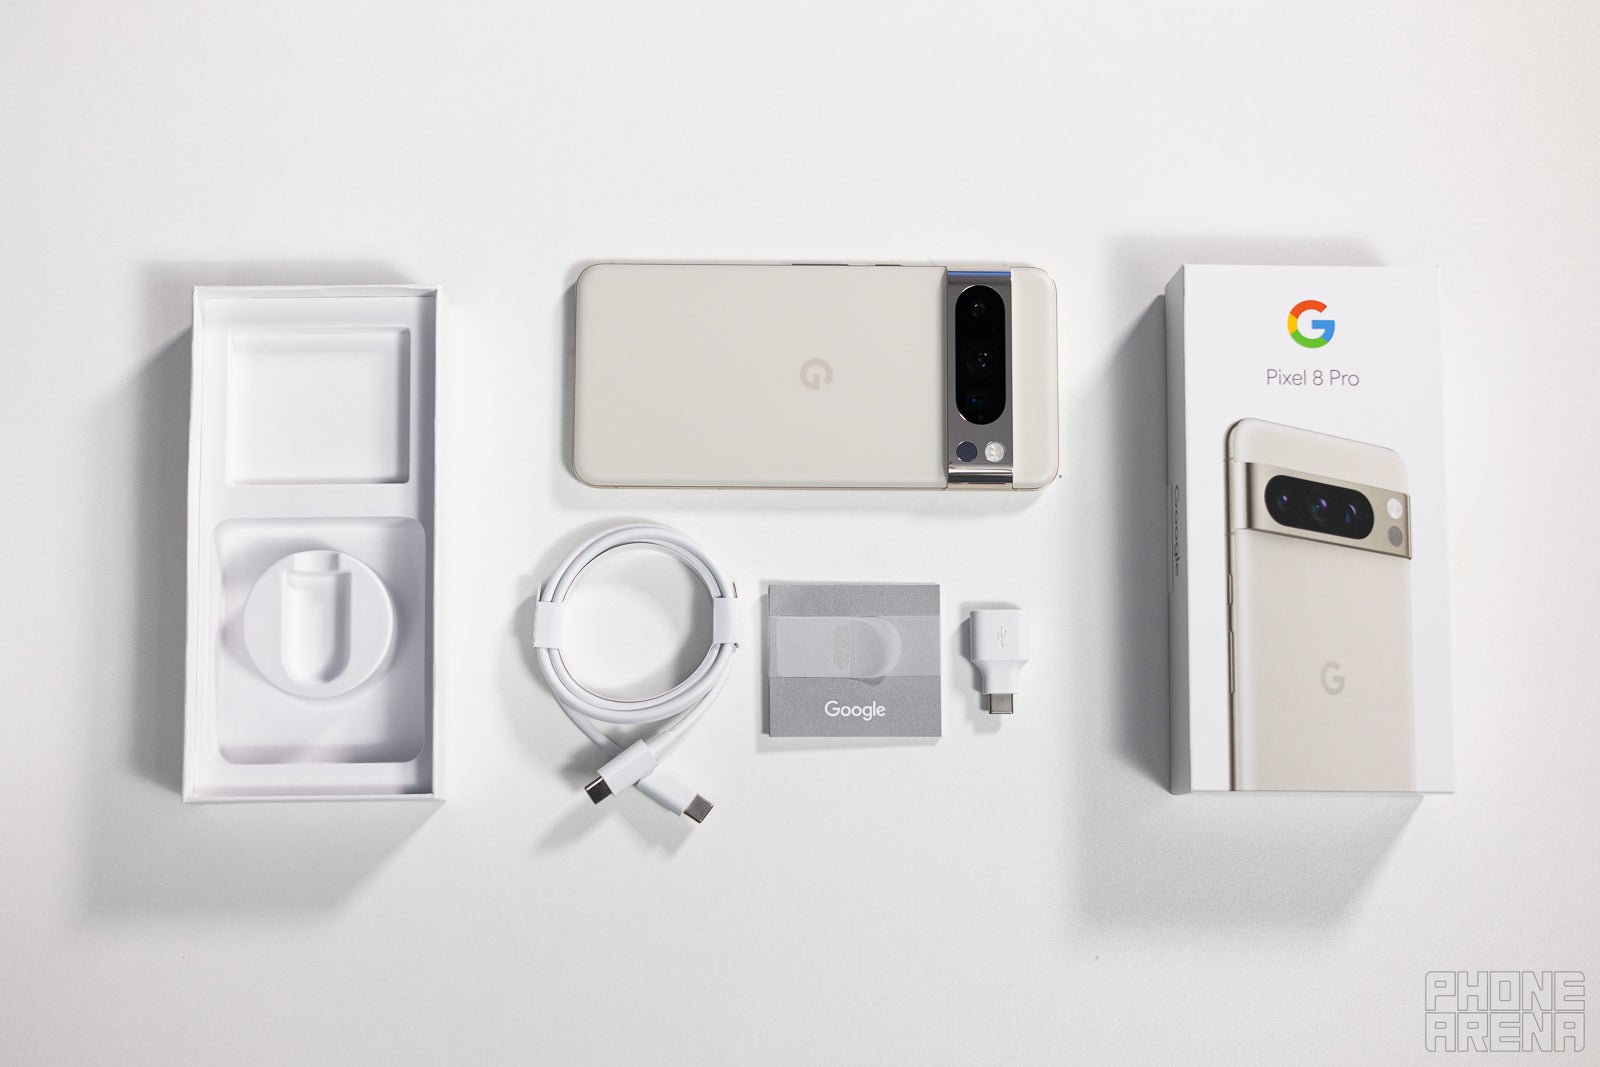 Google Pixel 8 Pro – Price, Specs & Reviews